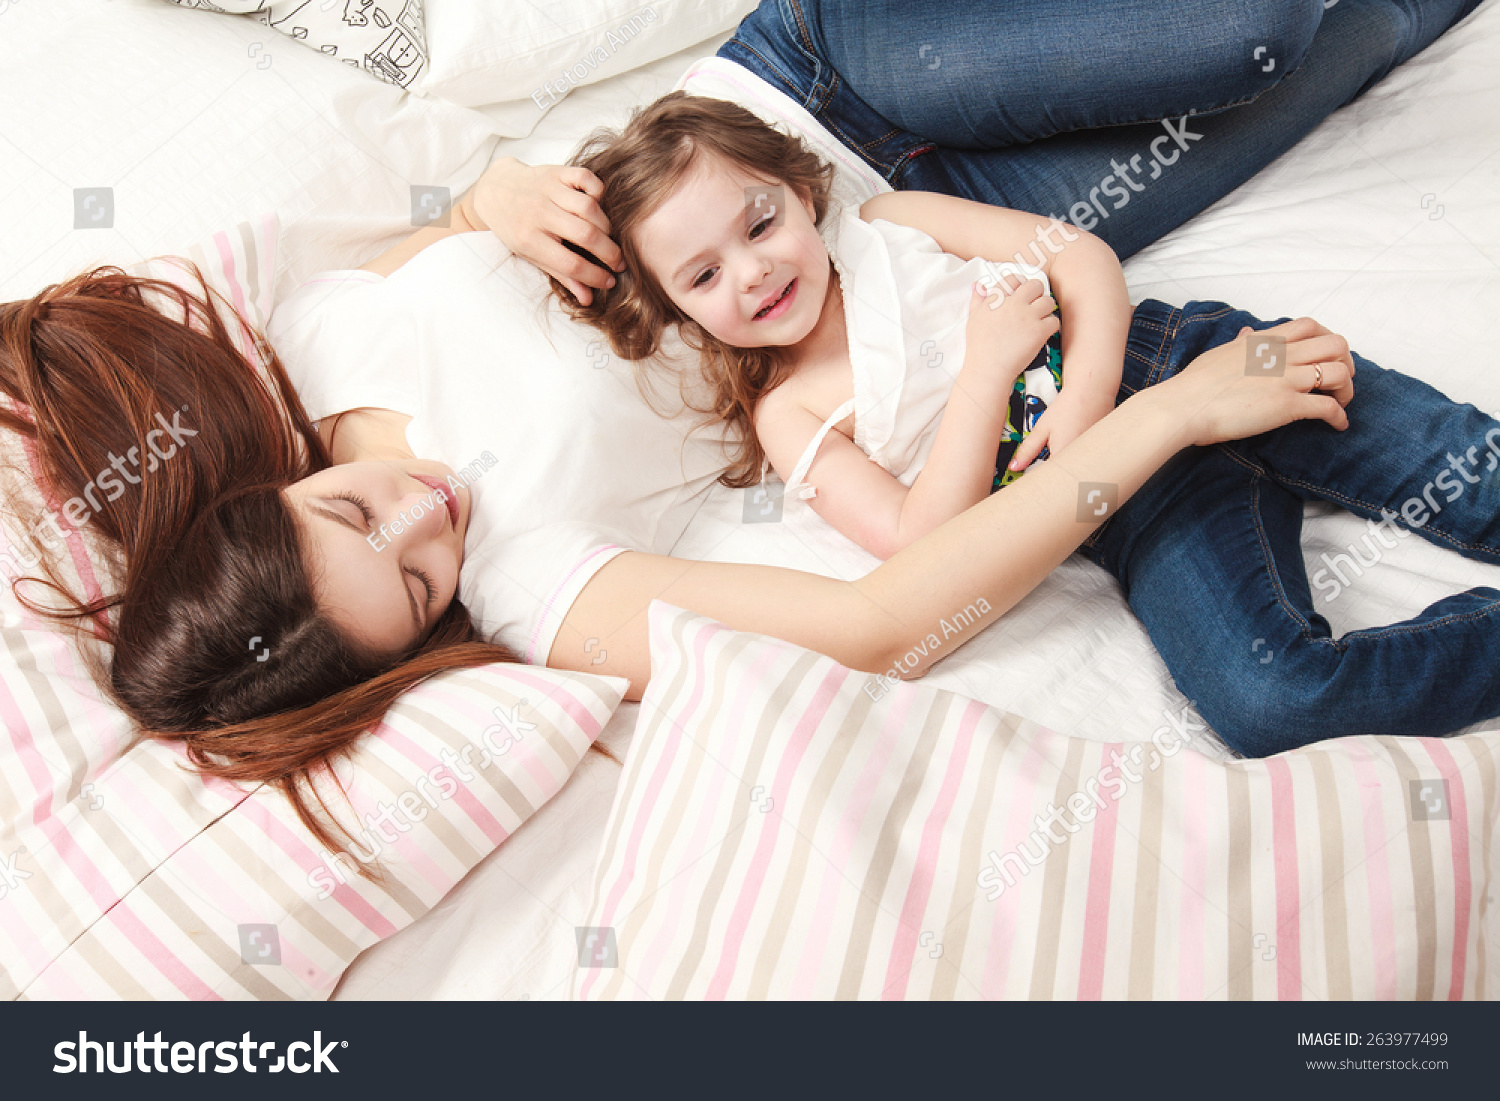 Мама с дочкой лежат на кровати